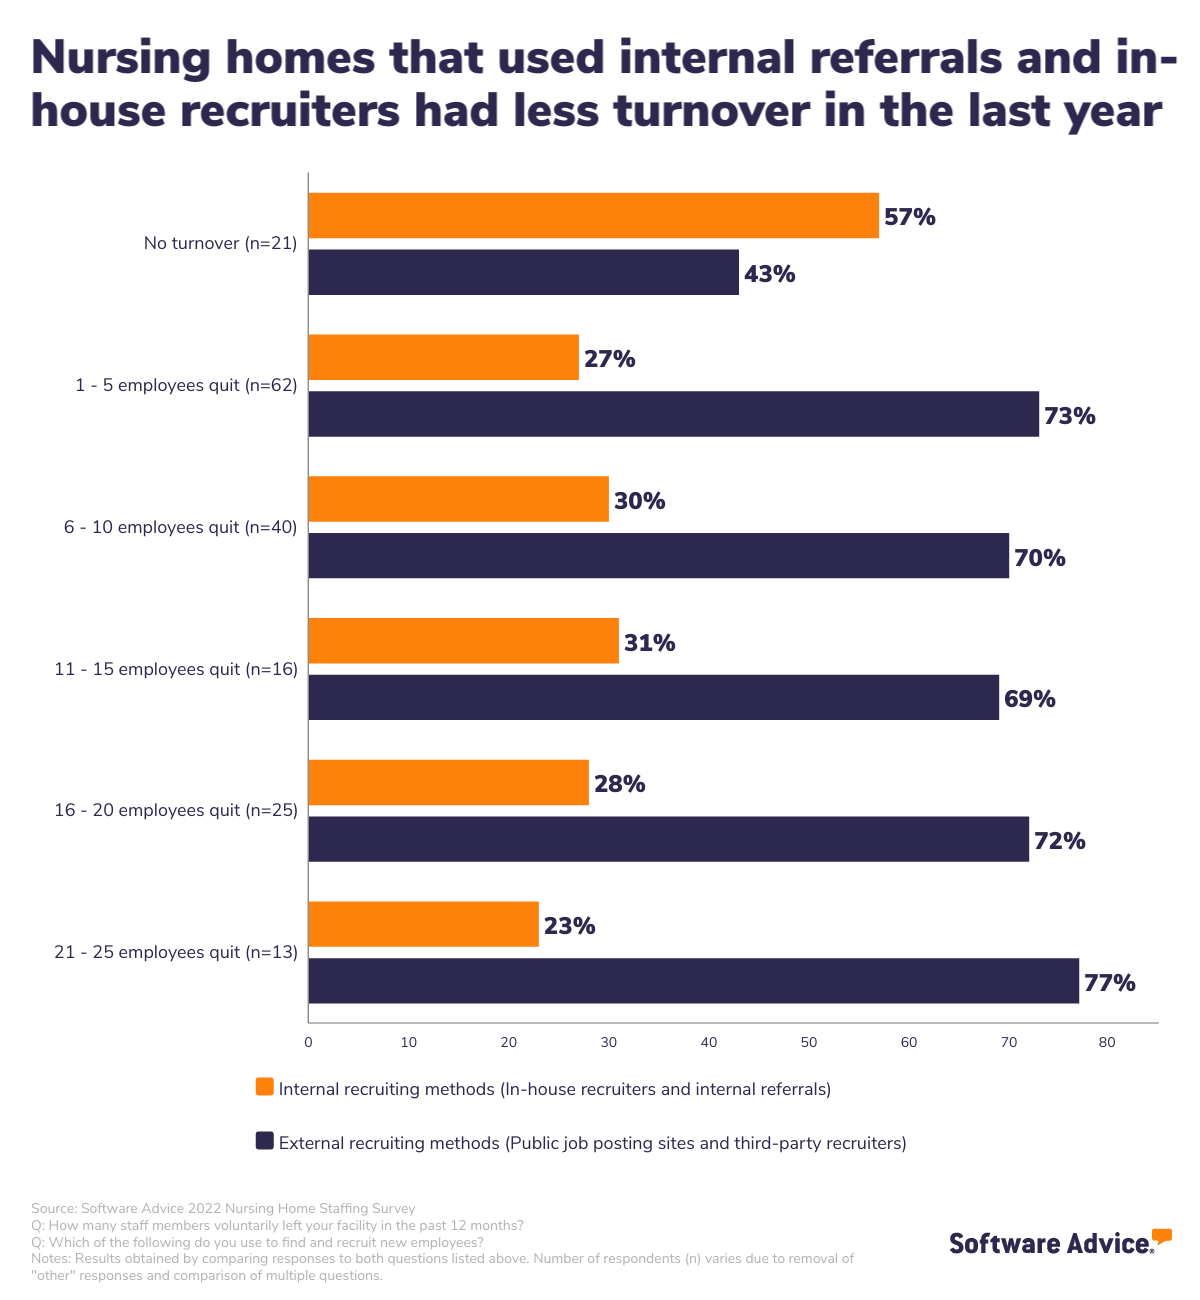 Internal-recruiting-more-effective-for-reducing-nursing-home-turnover-than-external-recruiting